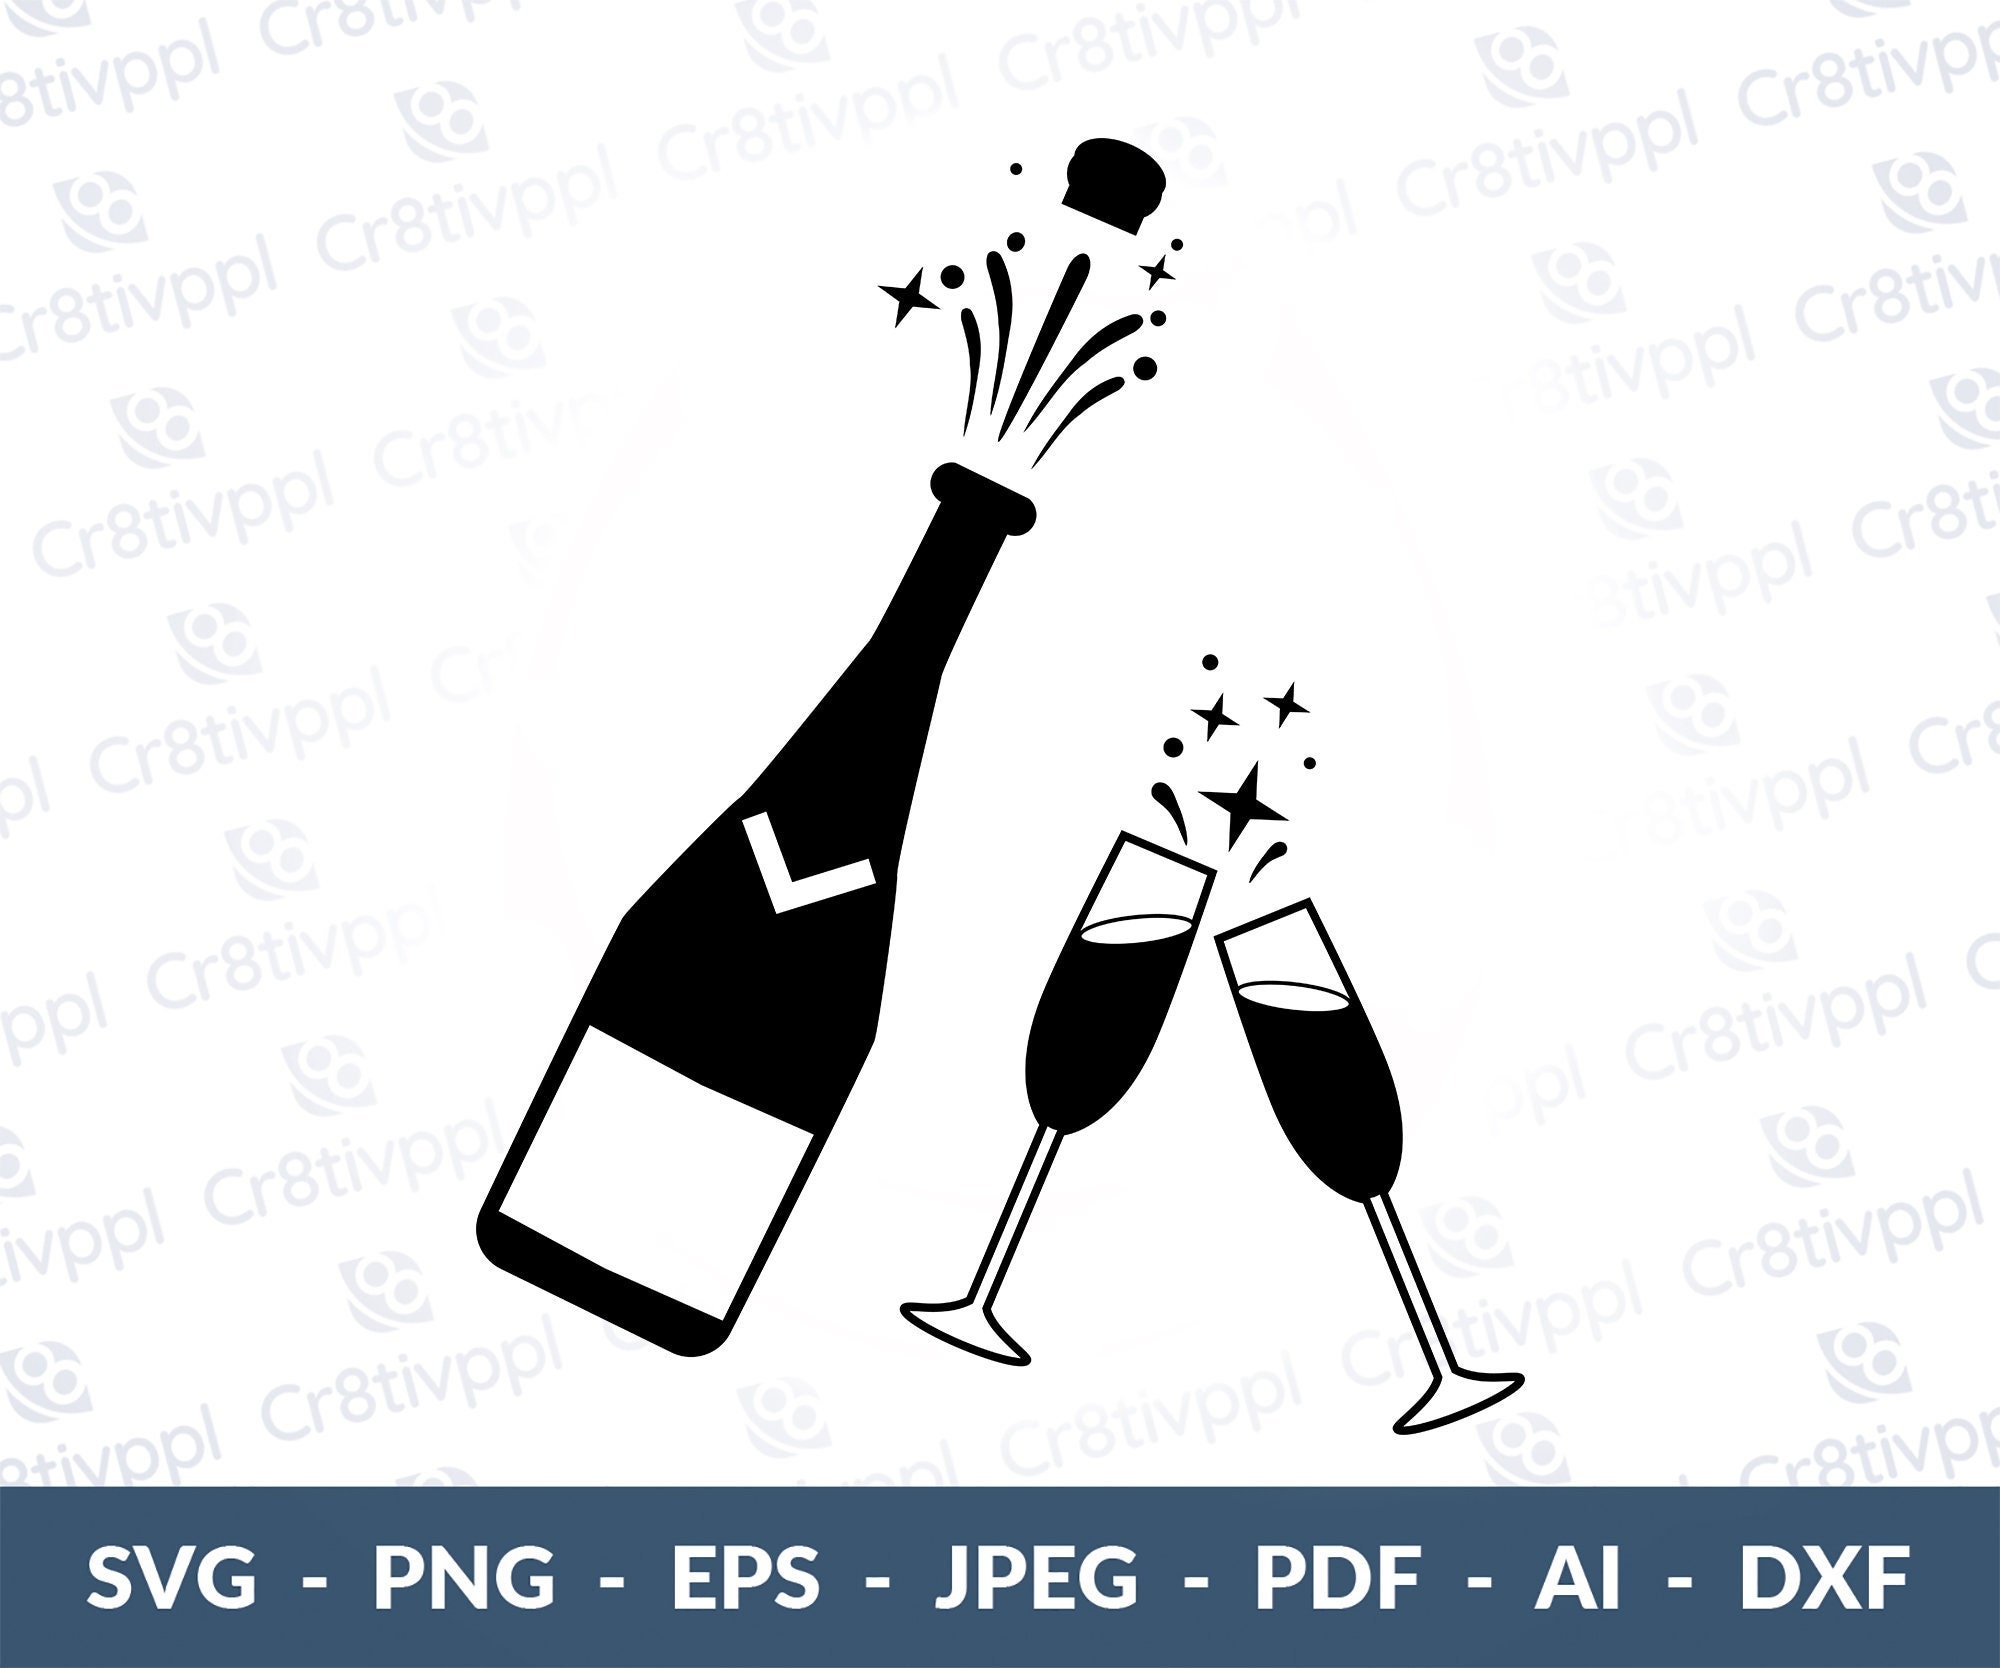 Moet & Chandon Champagne Logo PNG vector in SVG, PDF, AI, CDR format